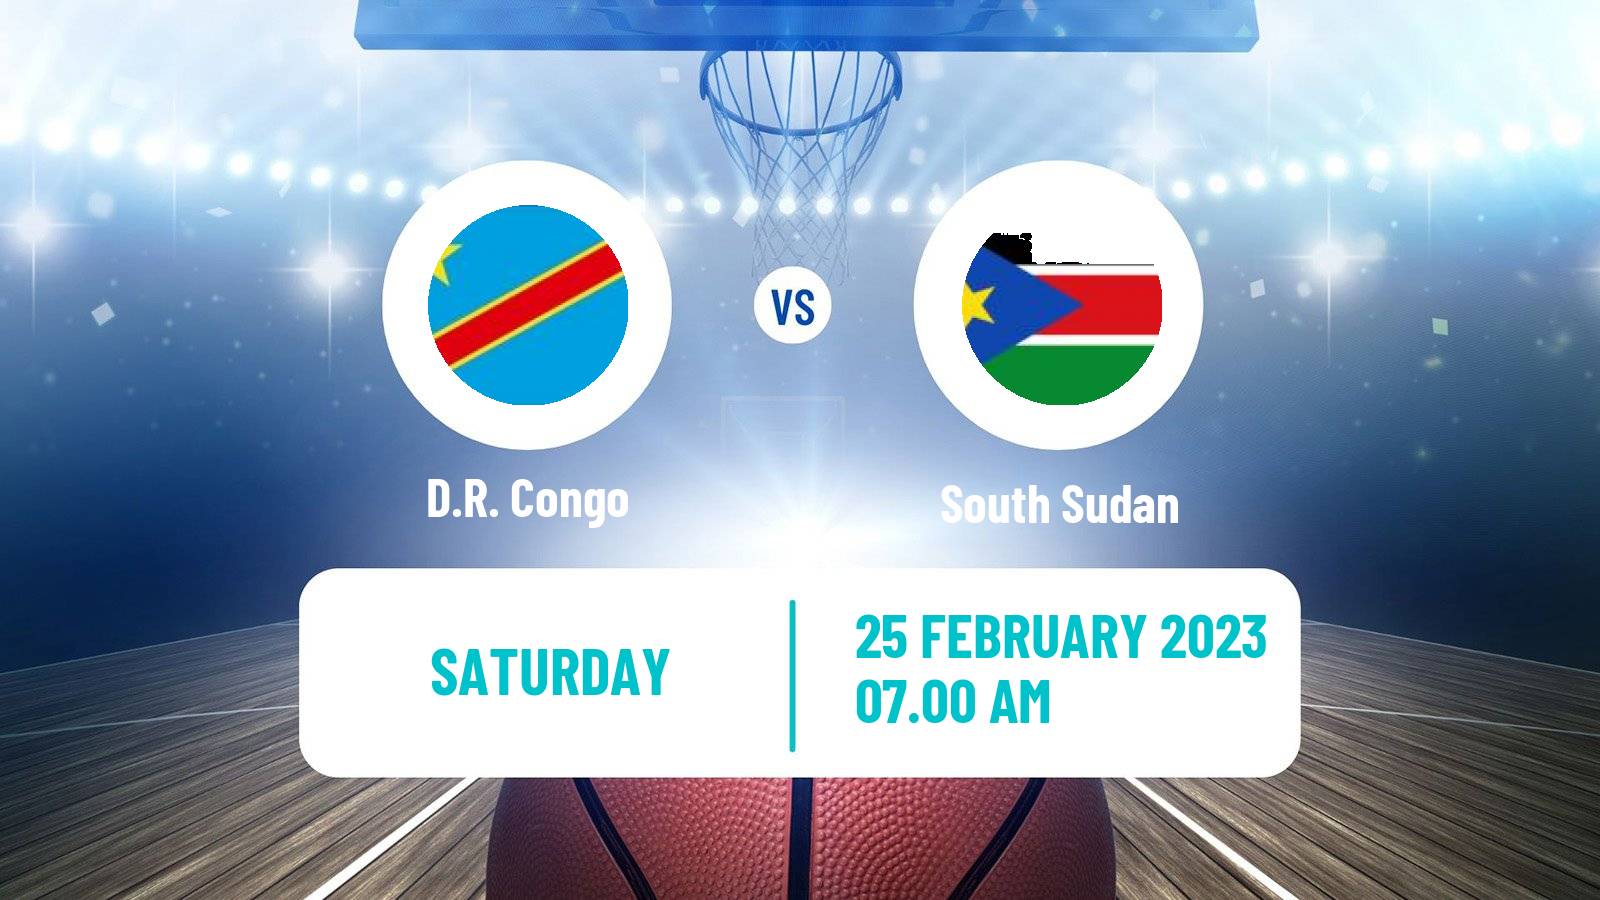 Basketball World Championship Basketball D.R. Congo - South Sudan